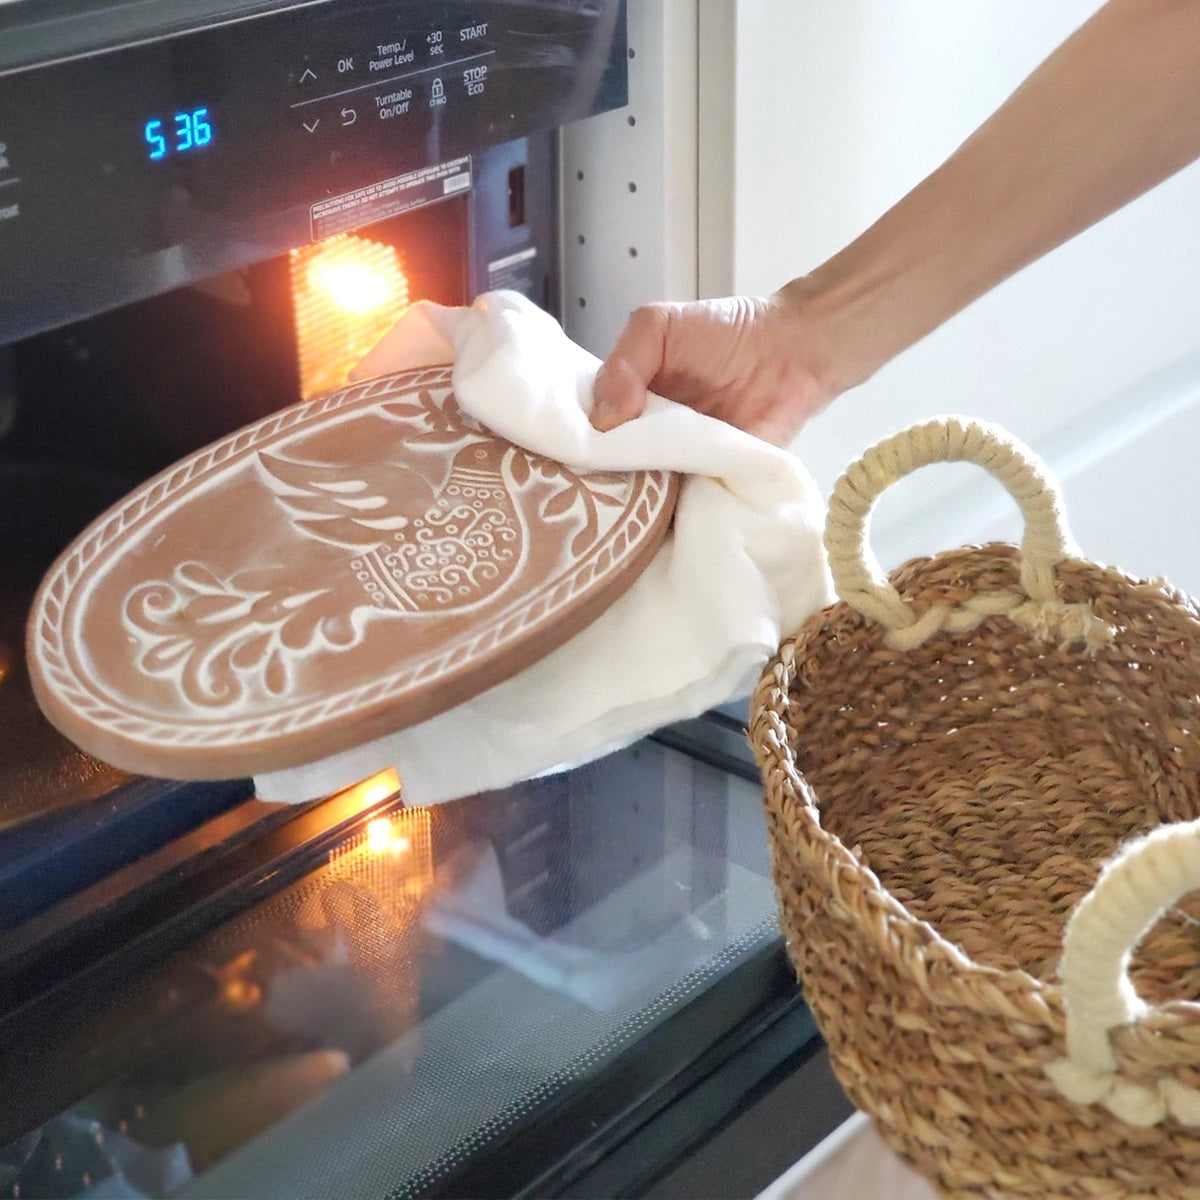 Woven Clay Basket Fruit Bowl Bread Warmer Baker home Decor Functional  Ceramic Basket 